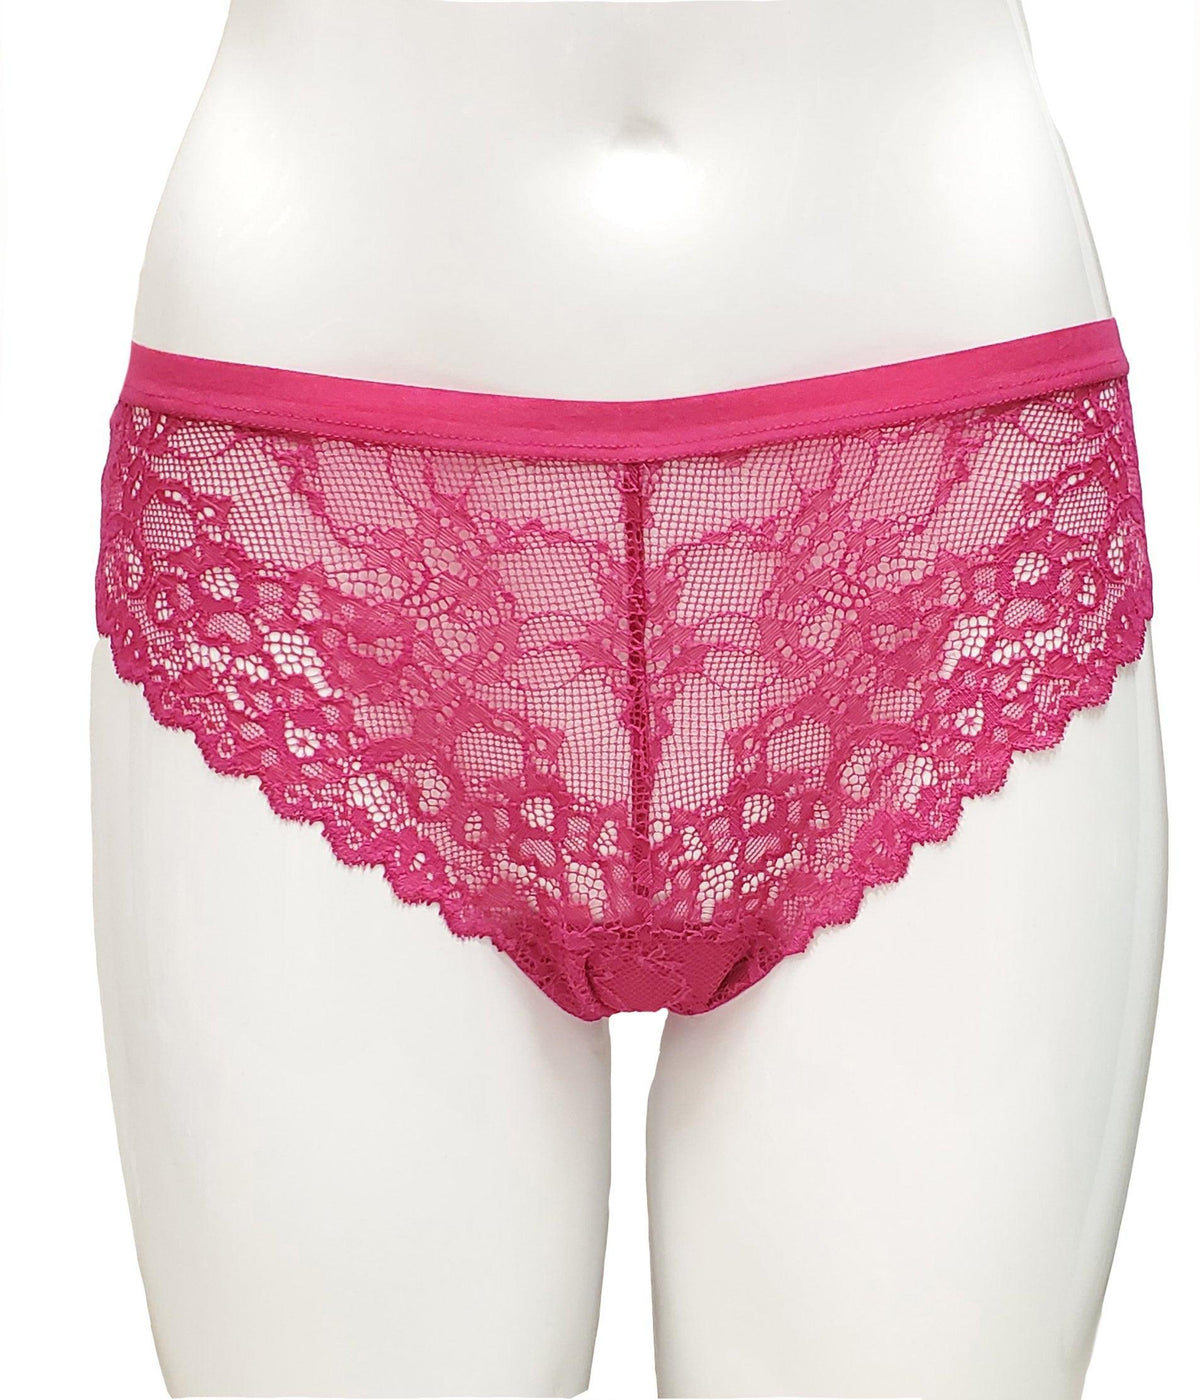 Nicole Cheeky Hot Pants - Fashion Colors - Sales Rack - Twelve Eighty Eight Panty twelveeightyeight.com